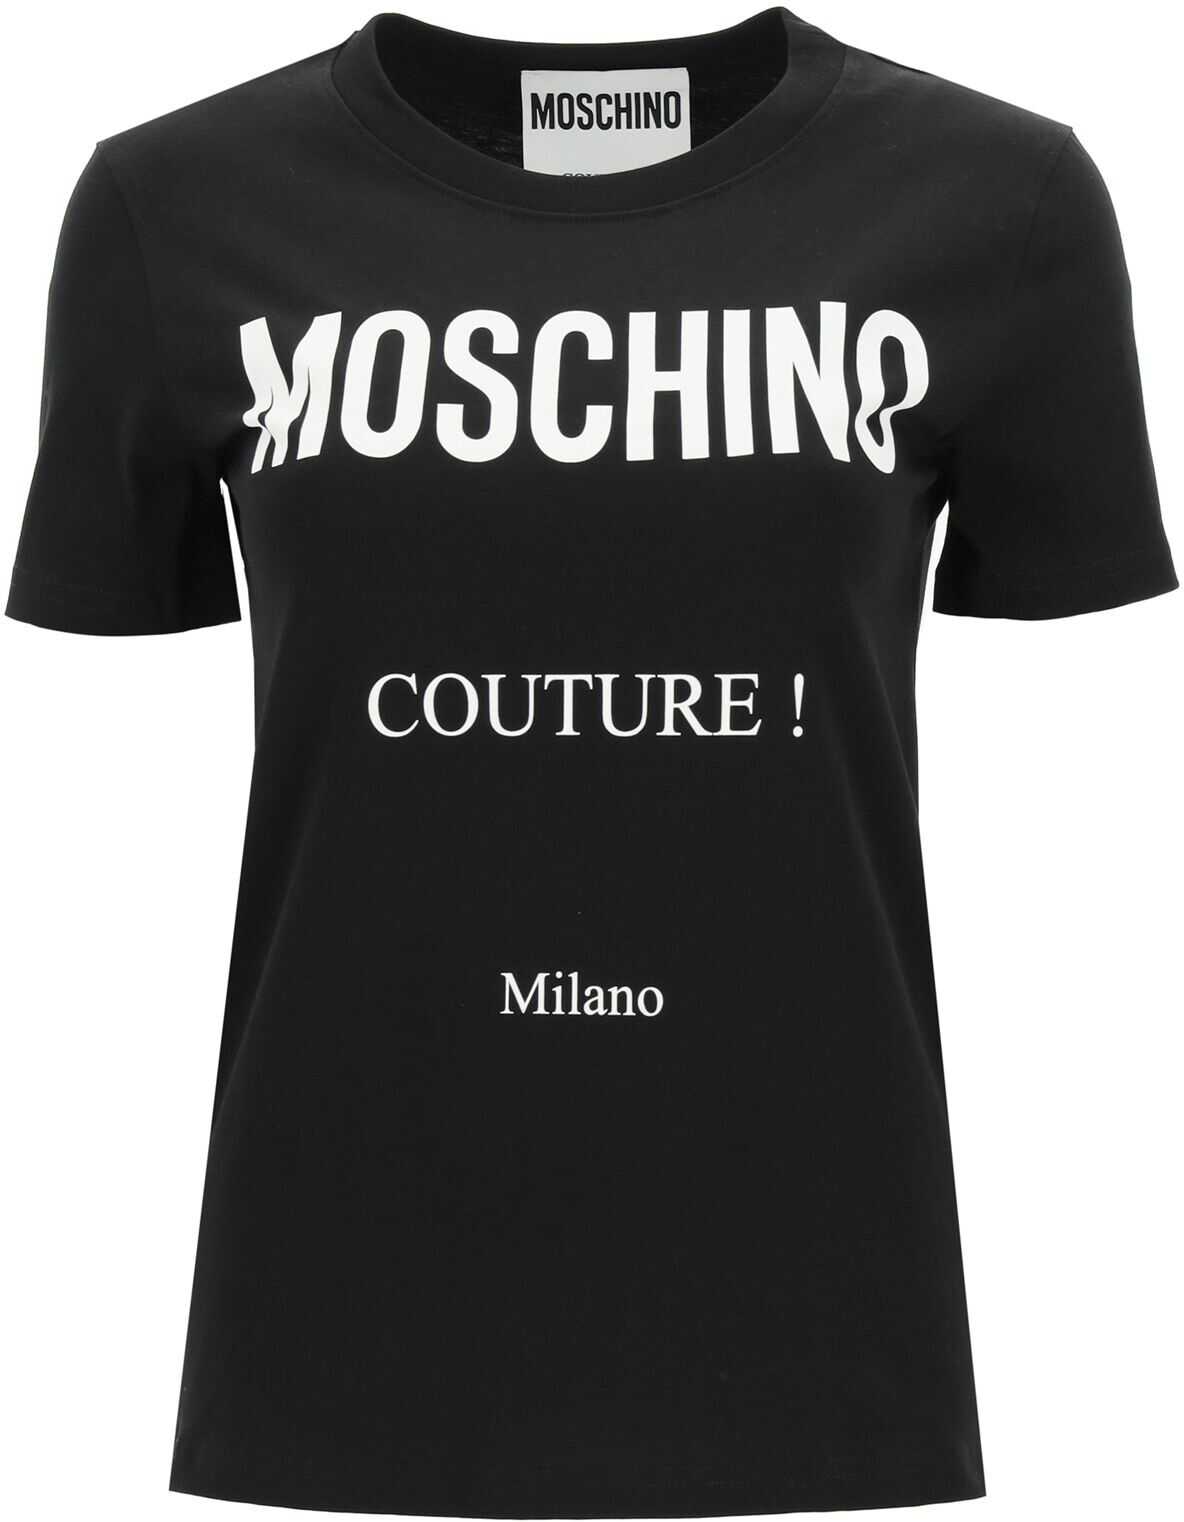 Moschino \' Couture\' Print T-Shirt J0711 5540 FANTASIA NERO